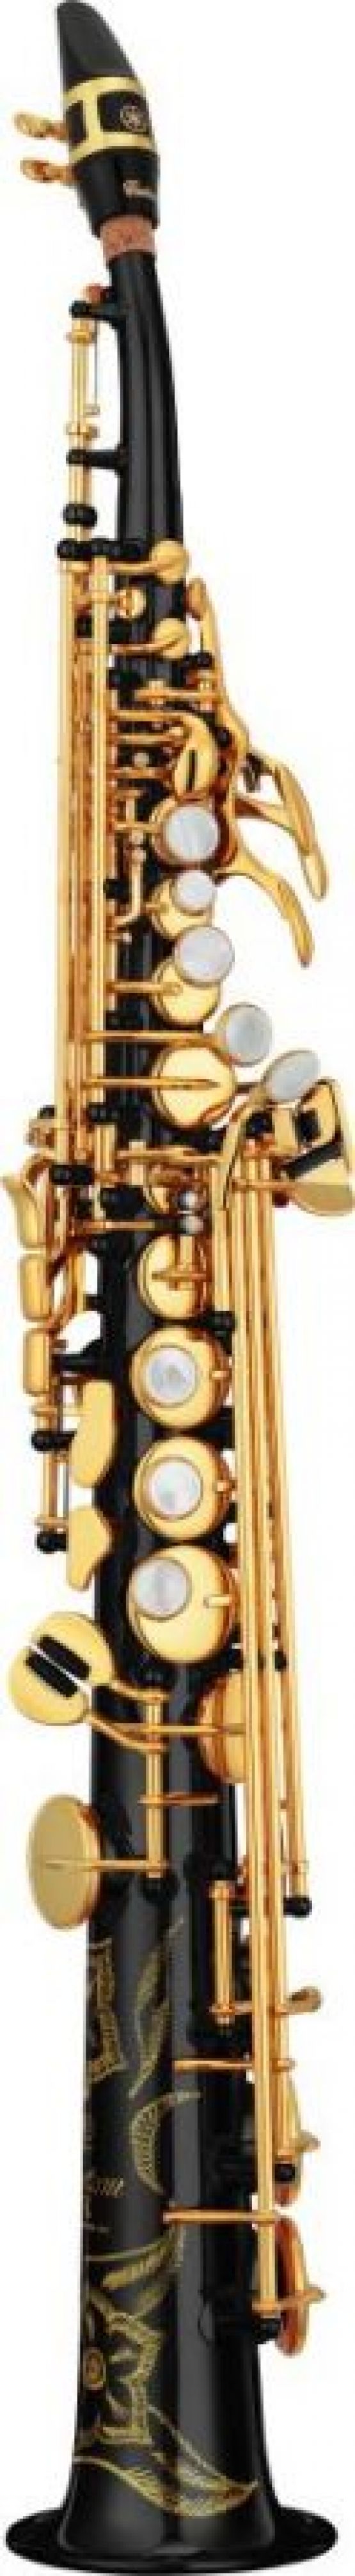 Yamaha YSS82ZRB Soprano Saxophone  main image